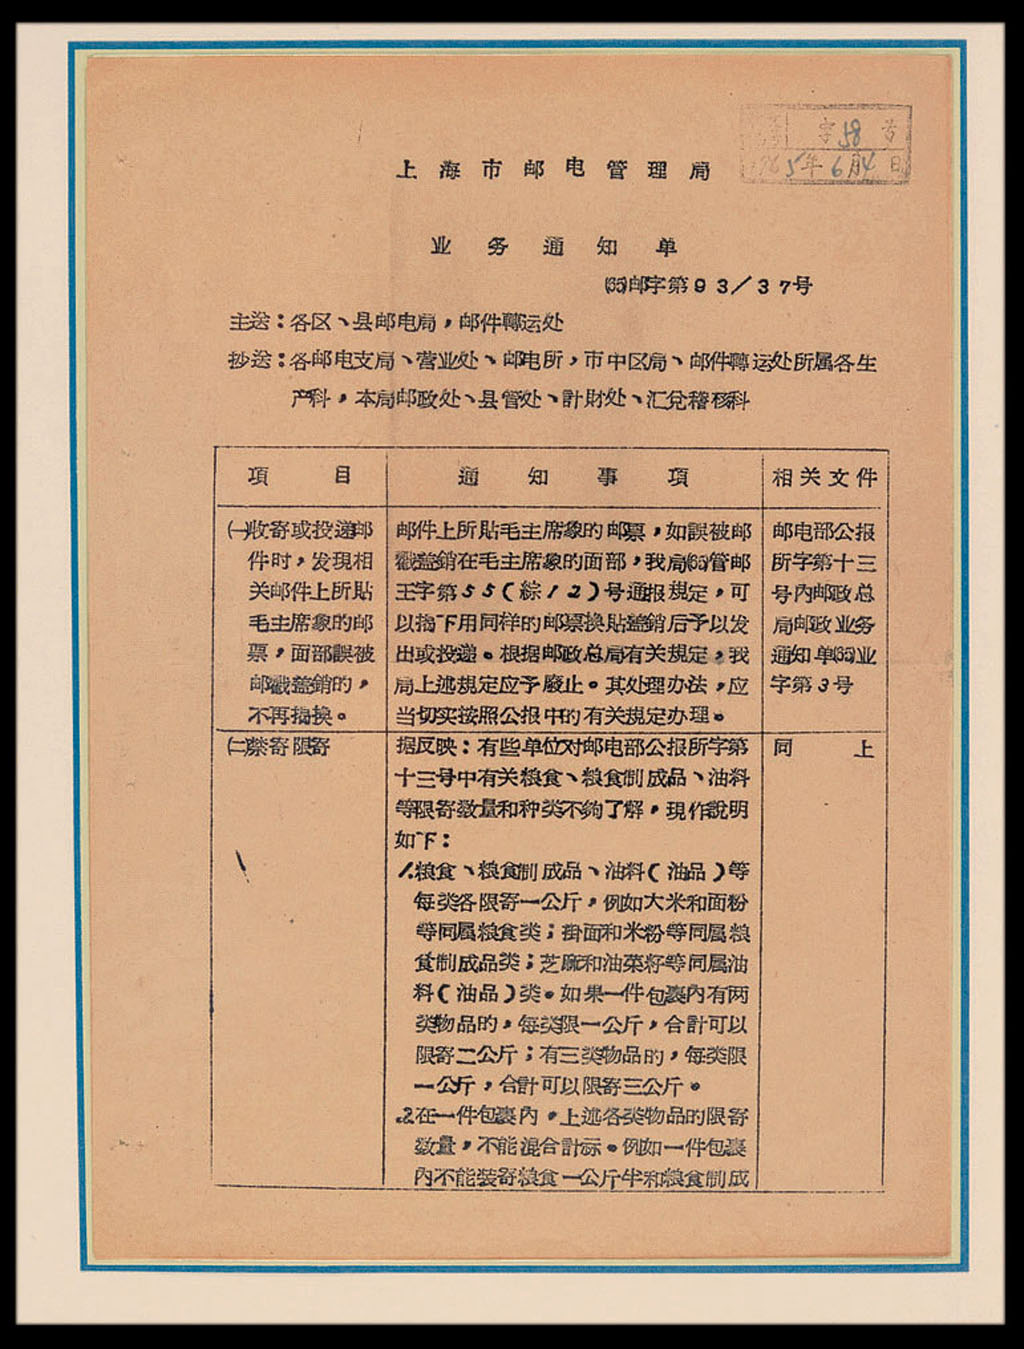 COL 1965年上海市邮电管理局“业务通知单”一份